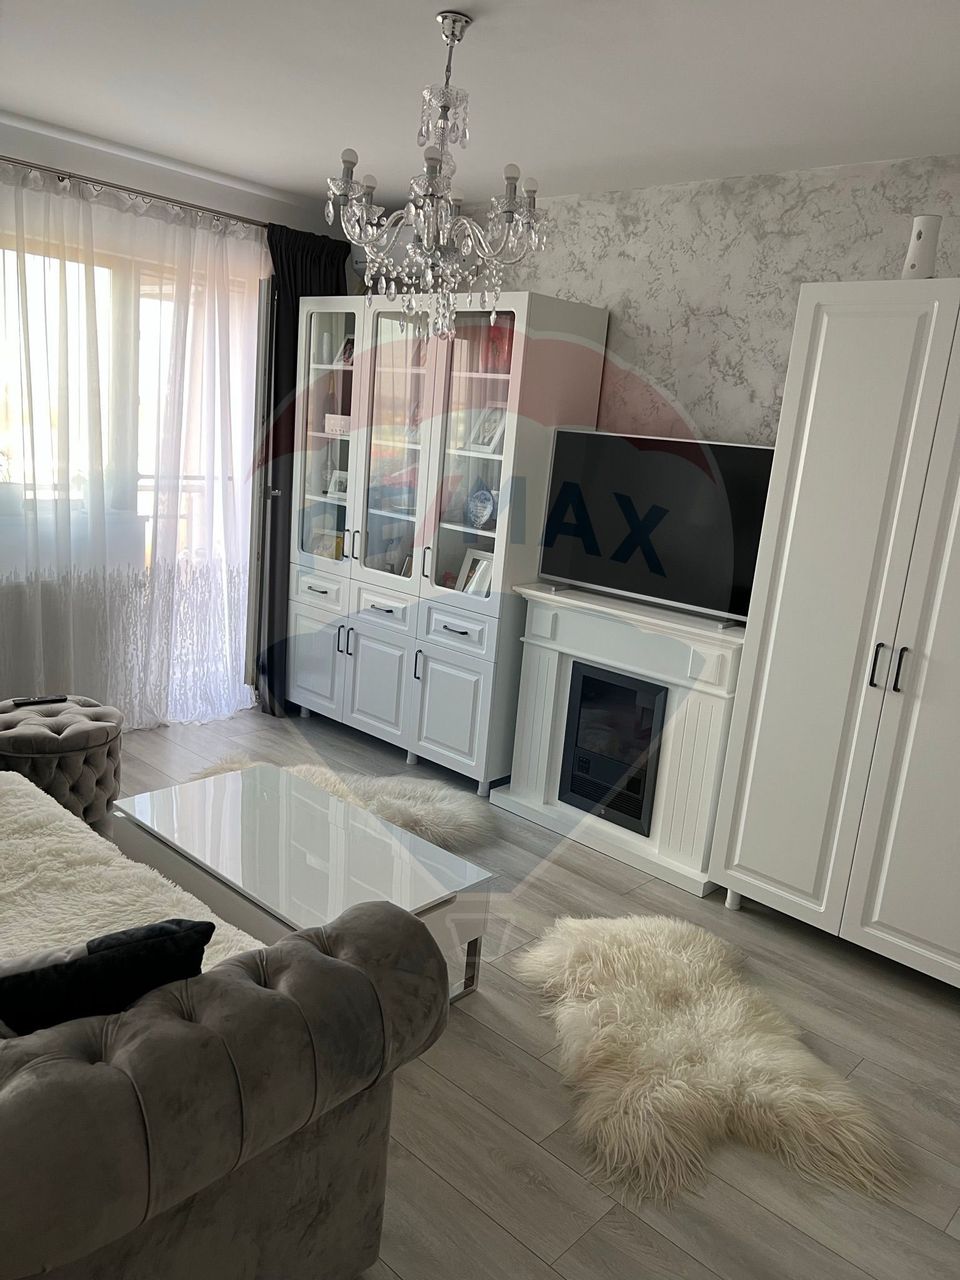 For rent 2 rooms new apartment in Militari, Pacii Metro